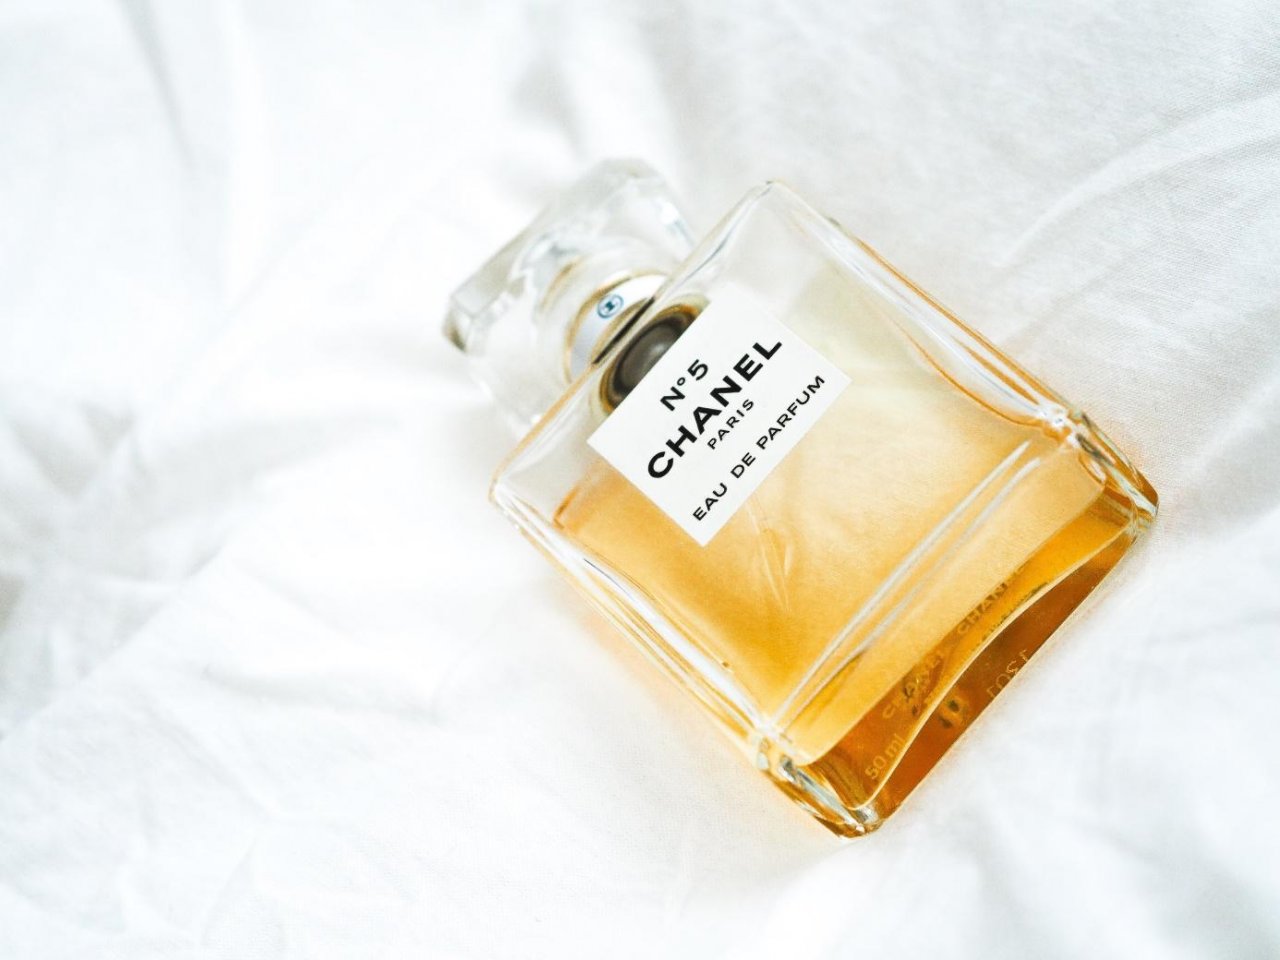 Butelka damskich perfum chanel numer 5